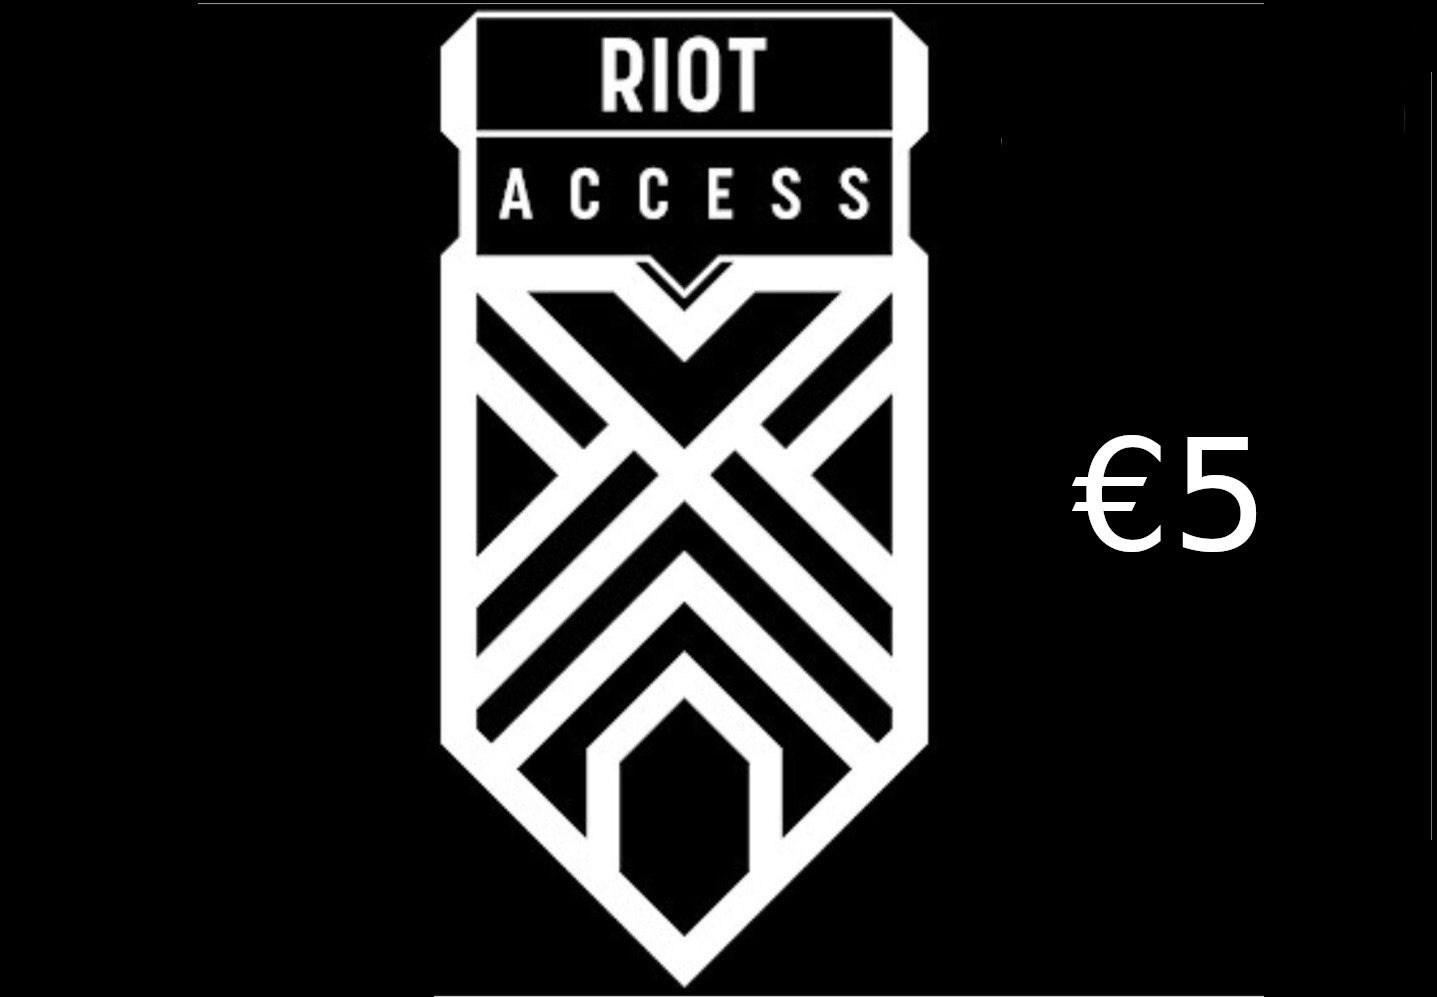 Riot Access €5 Code EU